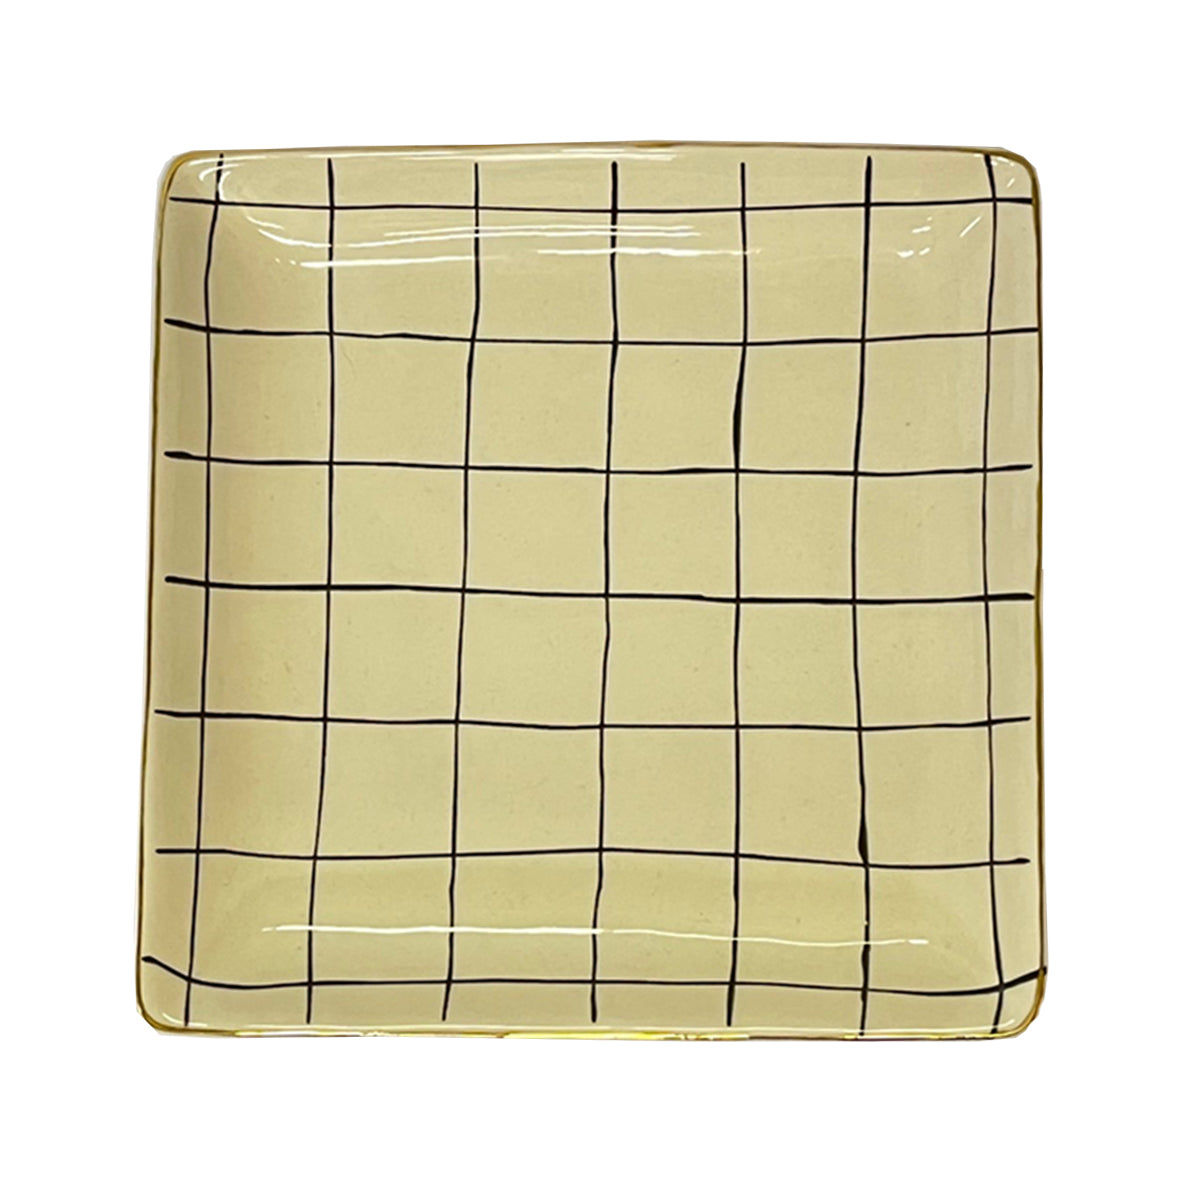 Carton of 6 x Gold Rim Grid Square Platters @ R70 per Platter